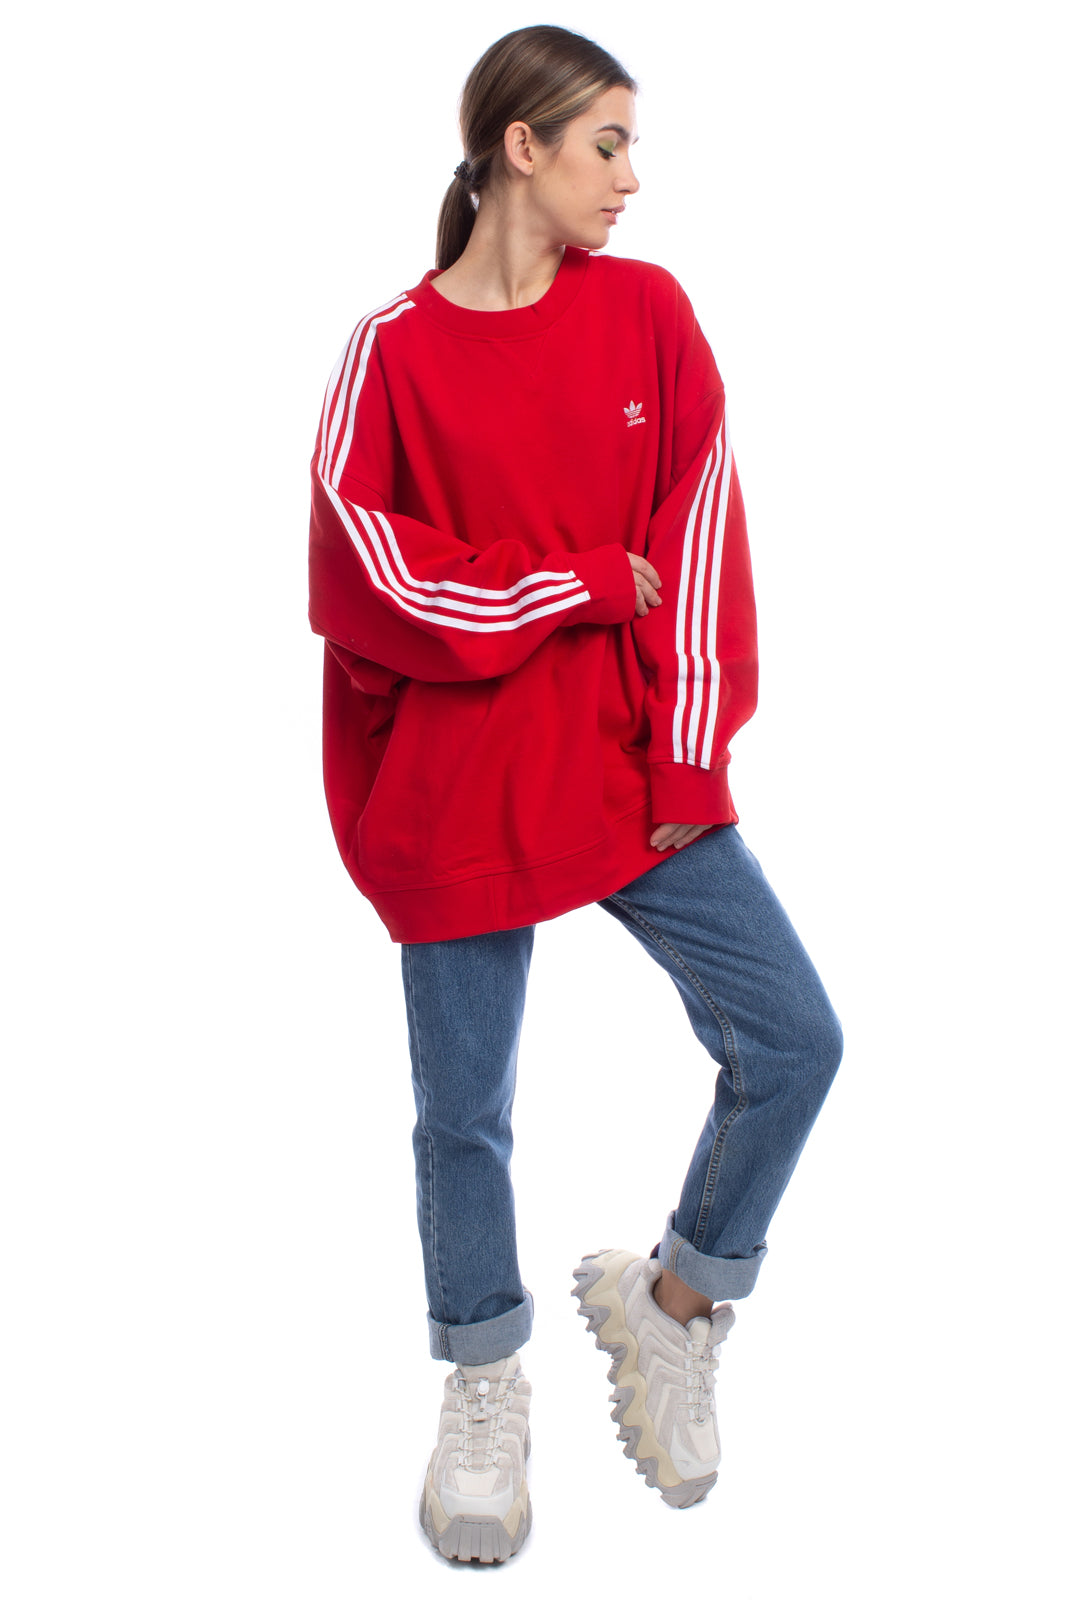 ADIDAS ORIGINALS Sweatshirt Plus Size 4X Two Tone 3-Iconic Stripes Round Neck gallery main photo